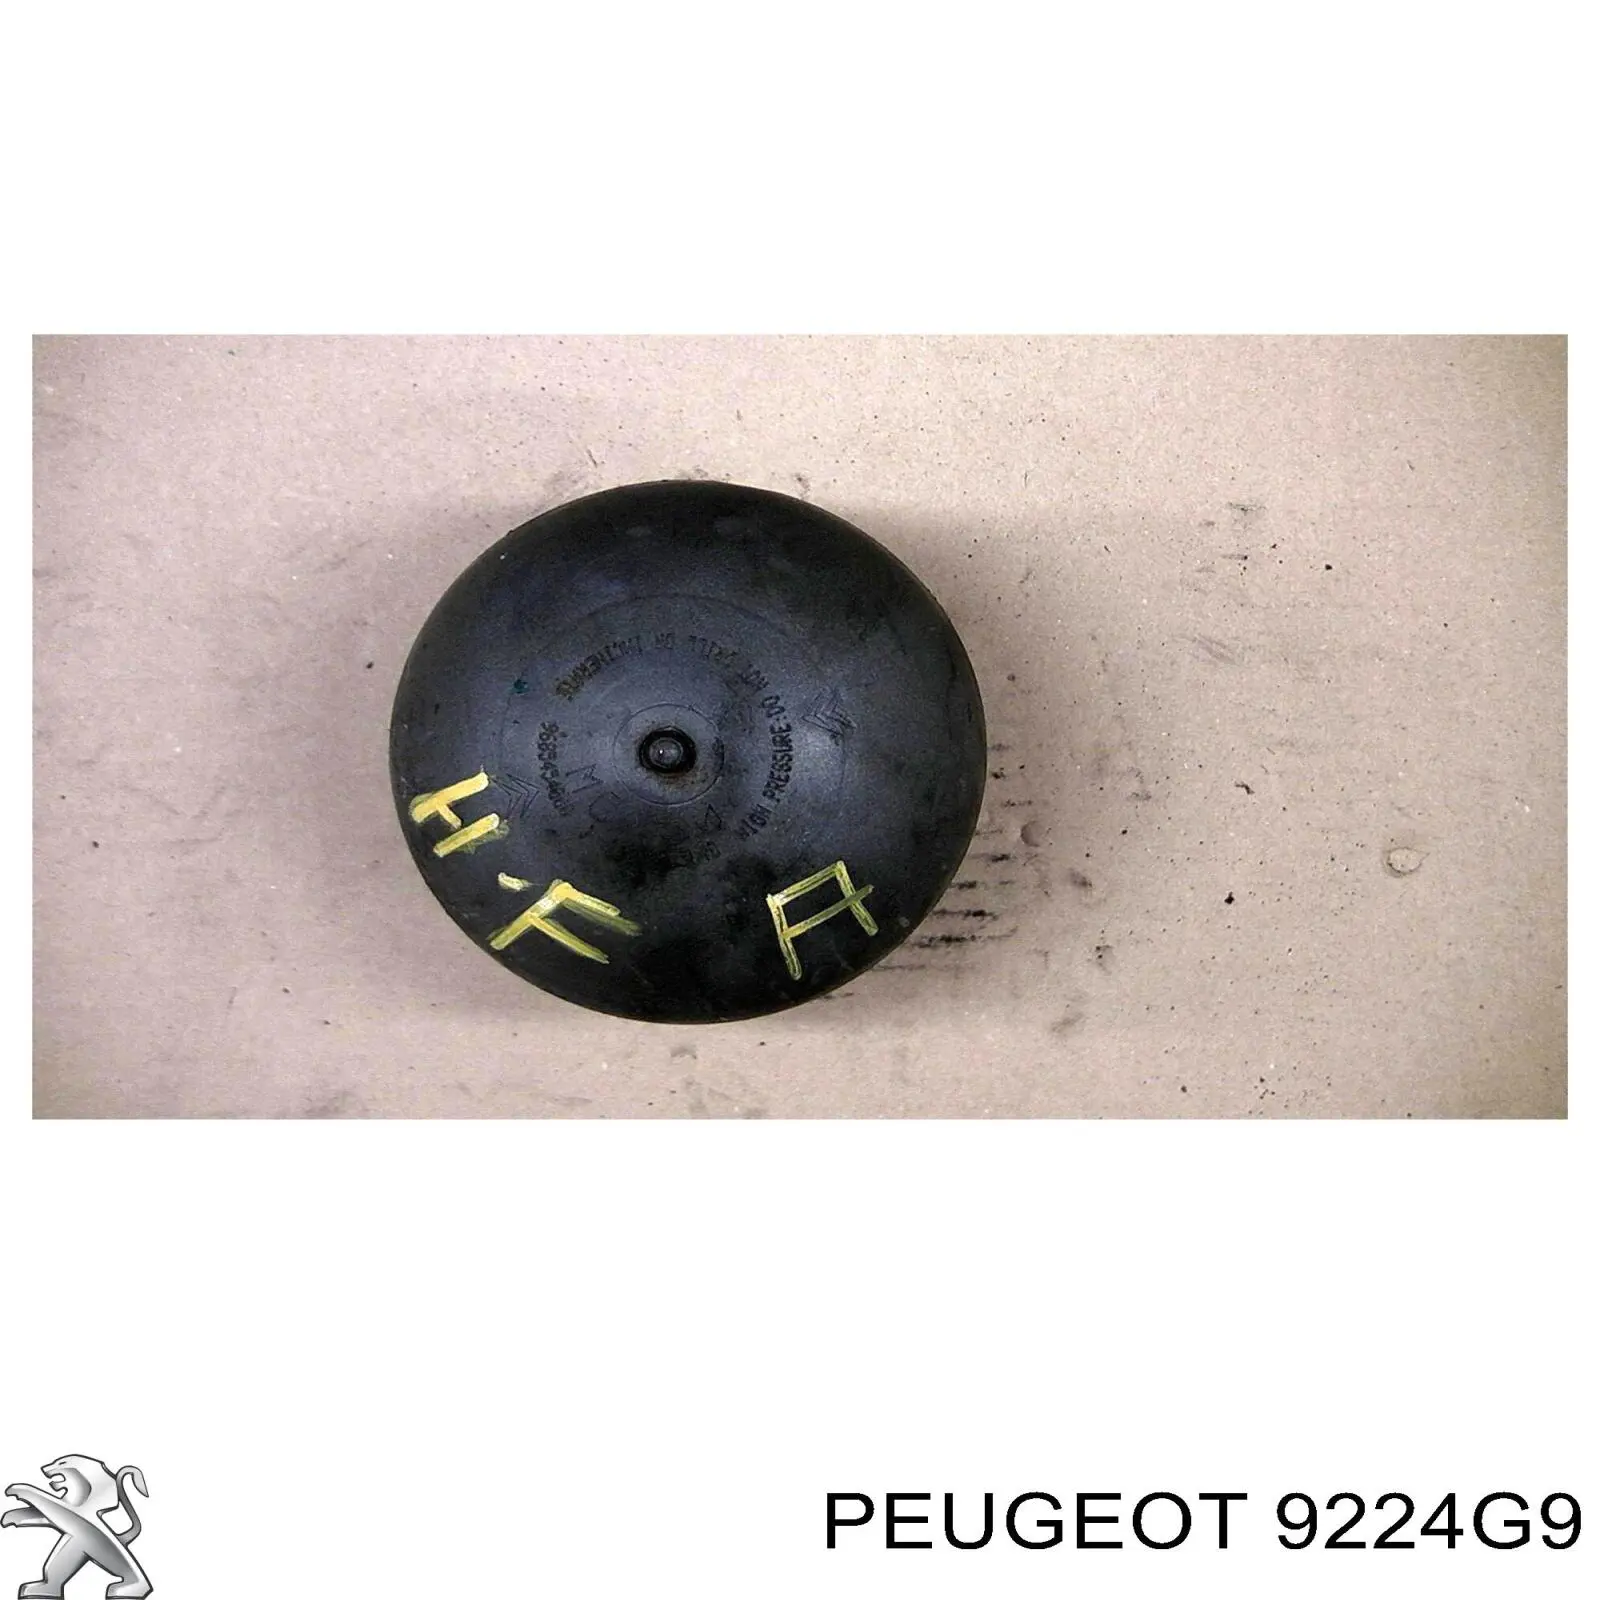 00009224G9 Peugeot/Citroen mecanismo de elevalunas, puerta trasera derecha